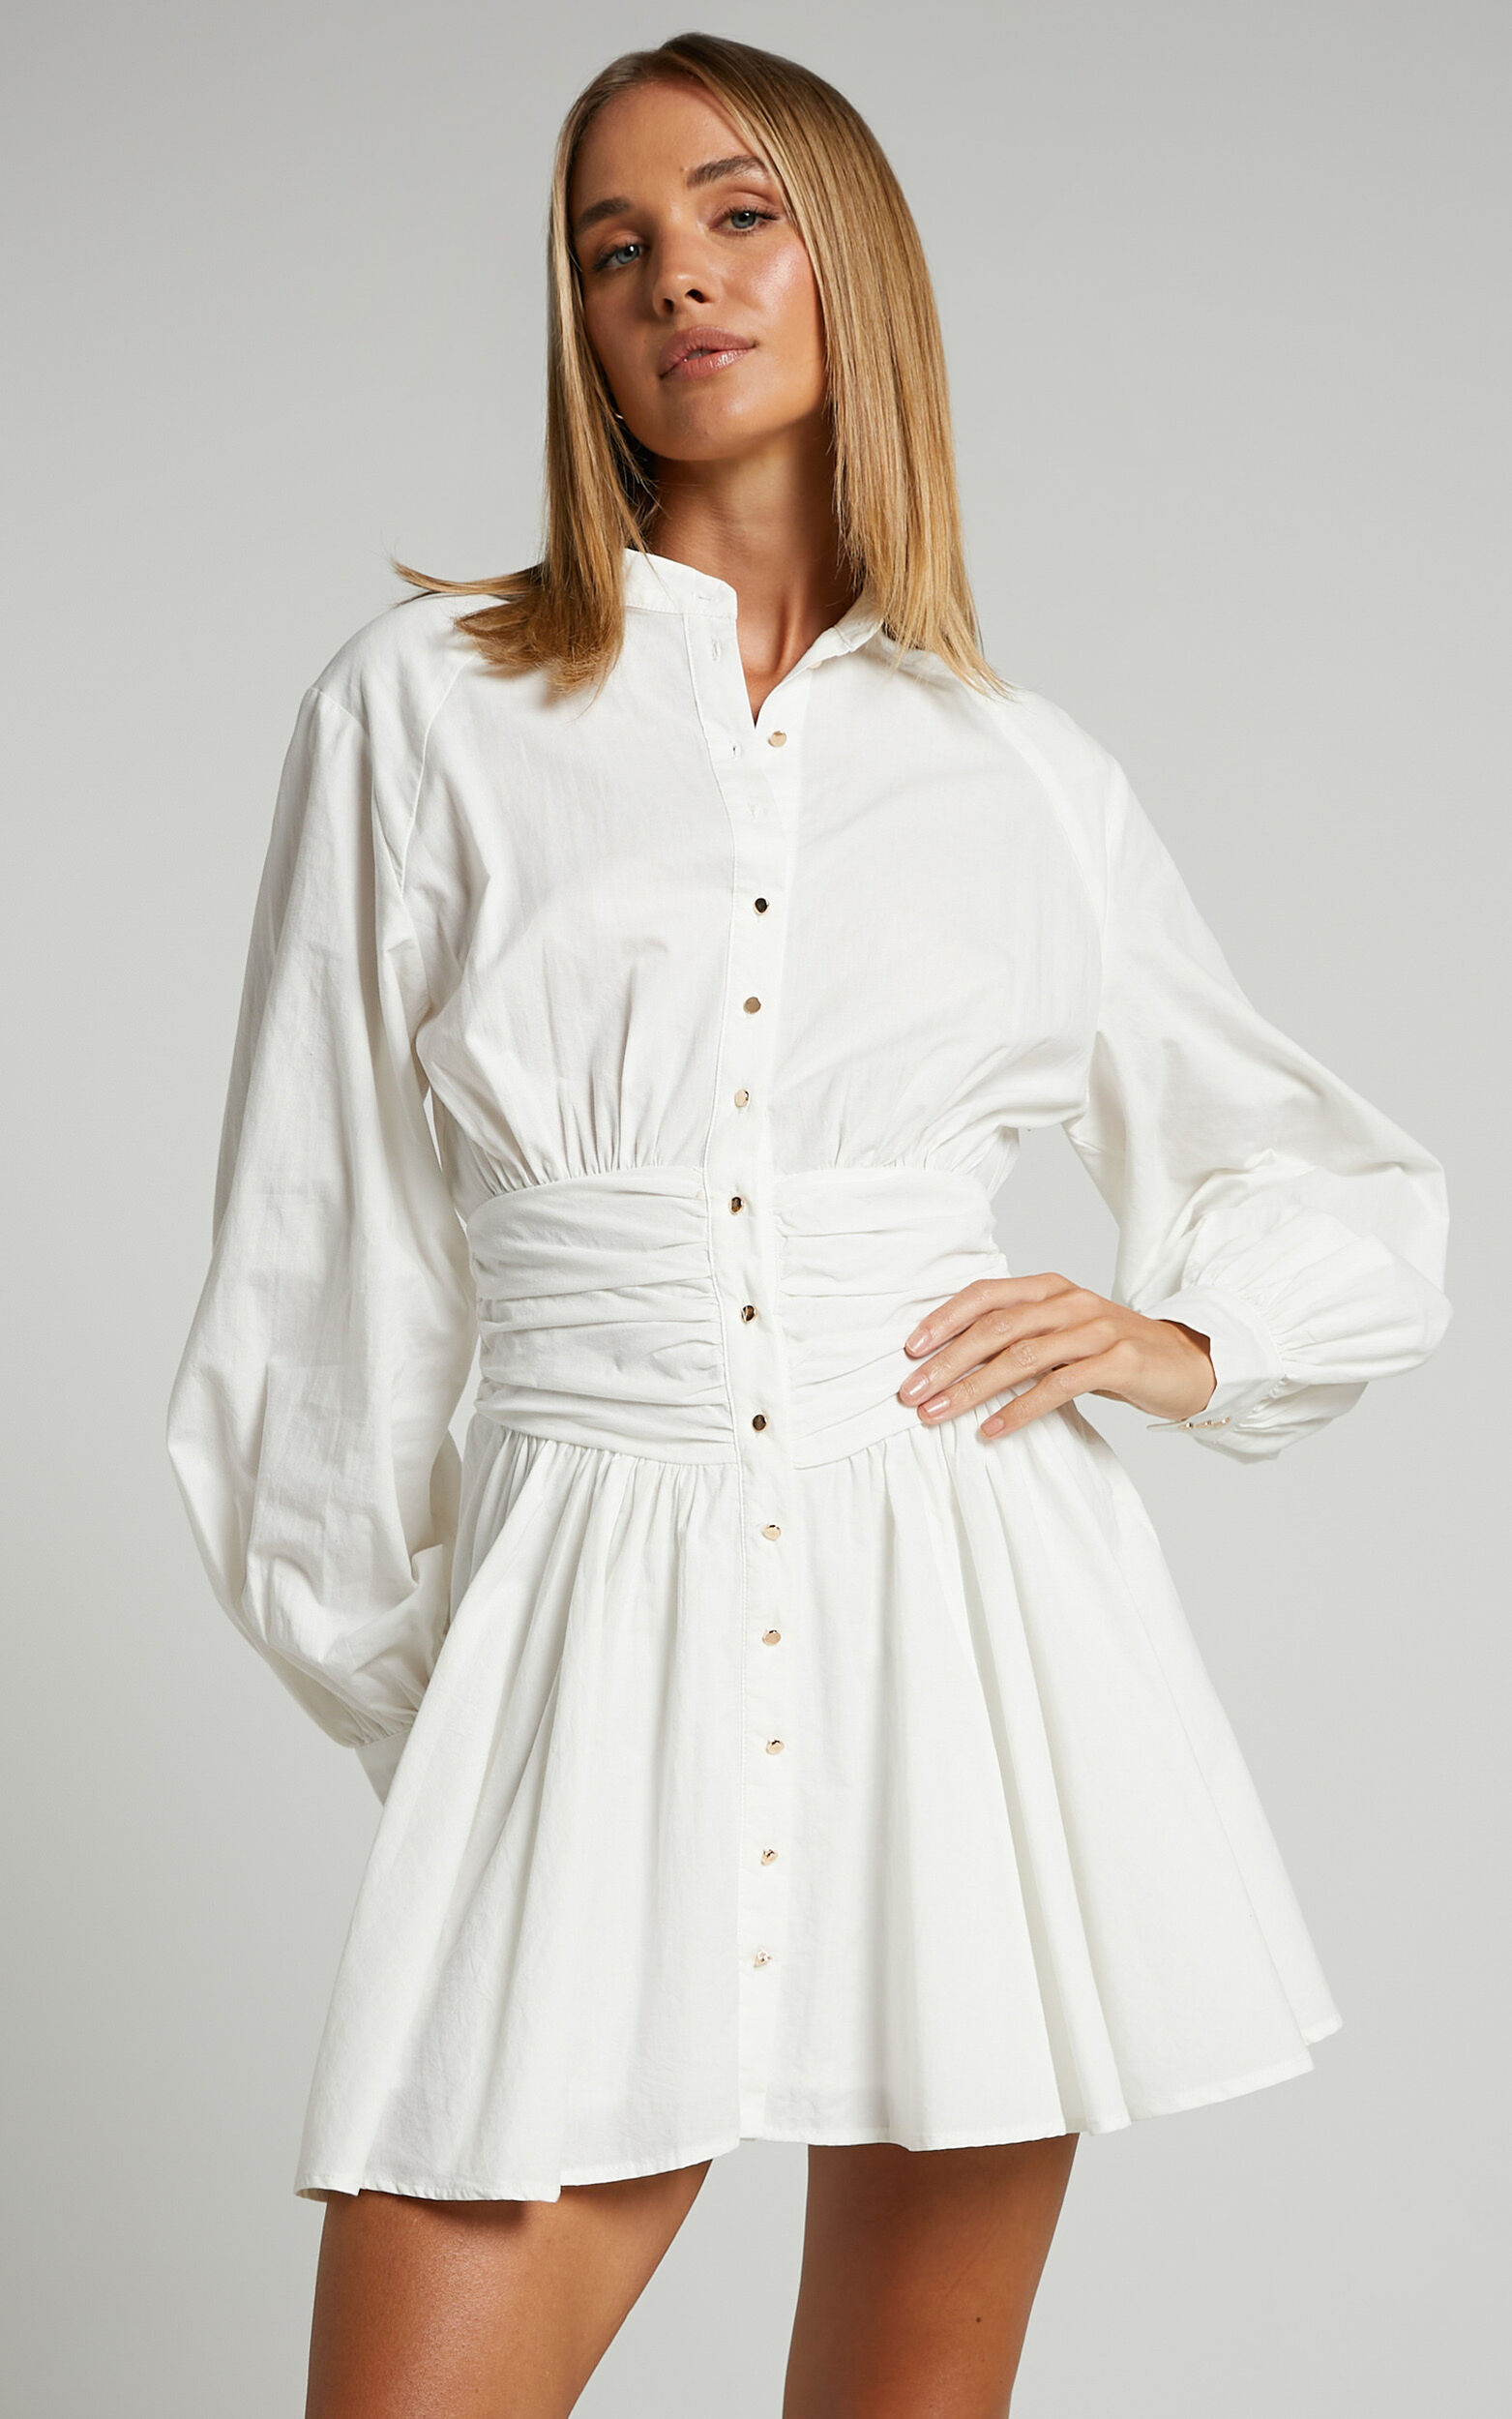 Cazie Mini Dress - Long Sleeve Gathered Waist Button Down Shirt Dress in White - 06, WHT1